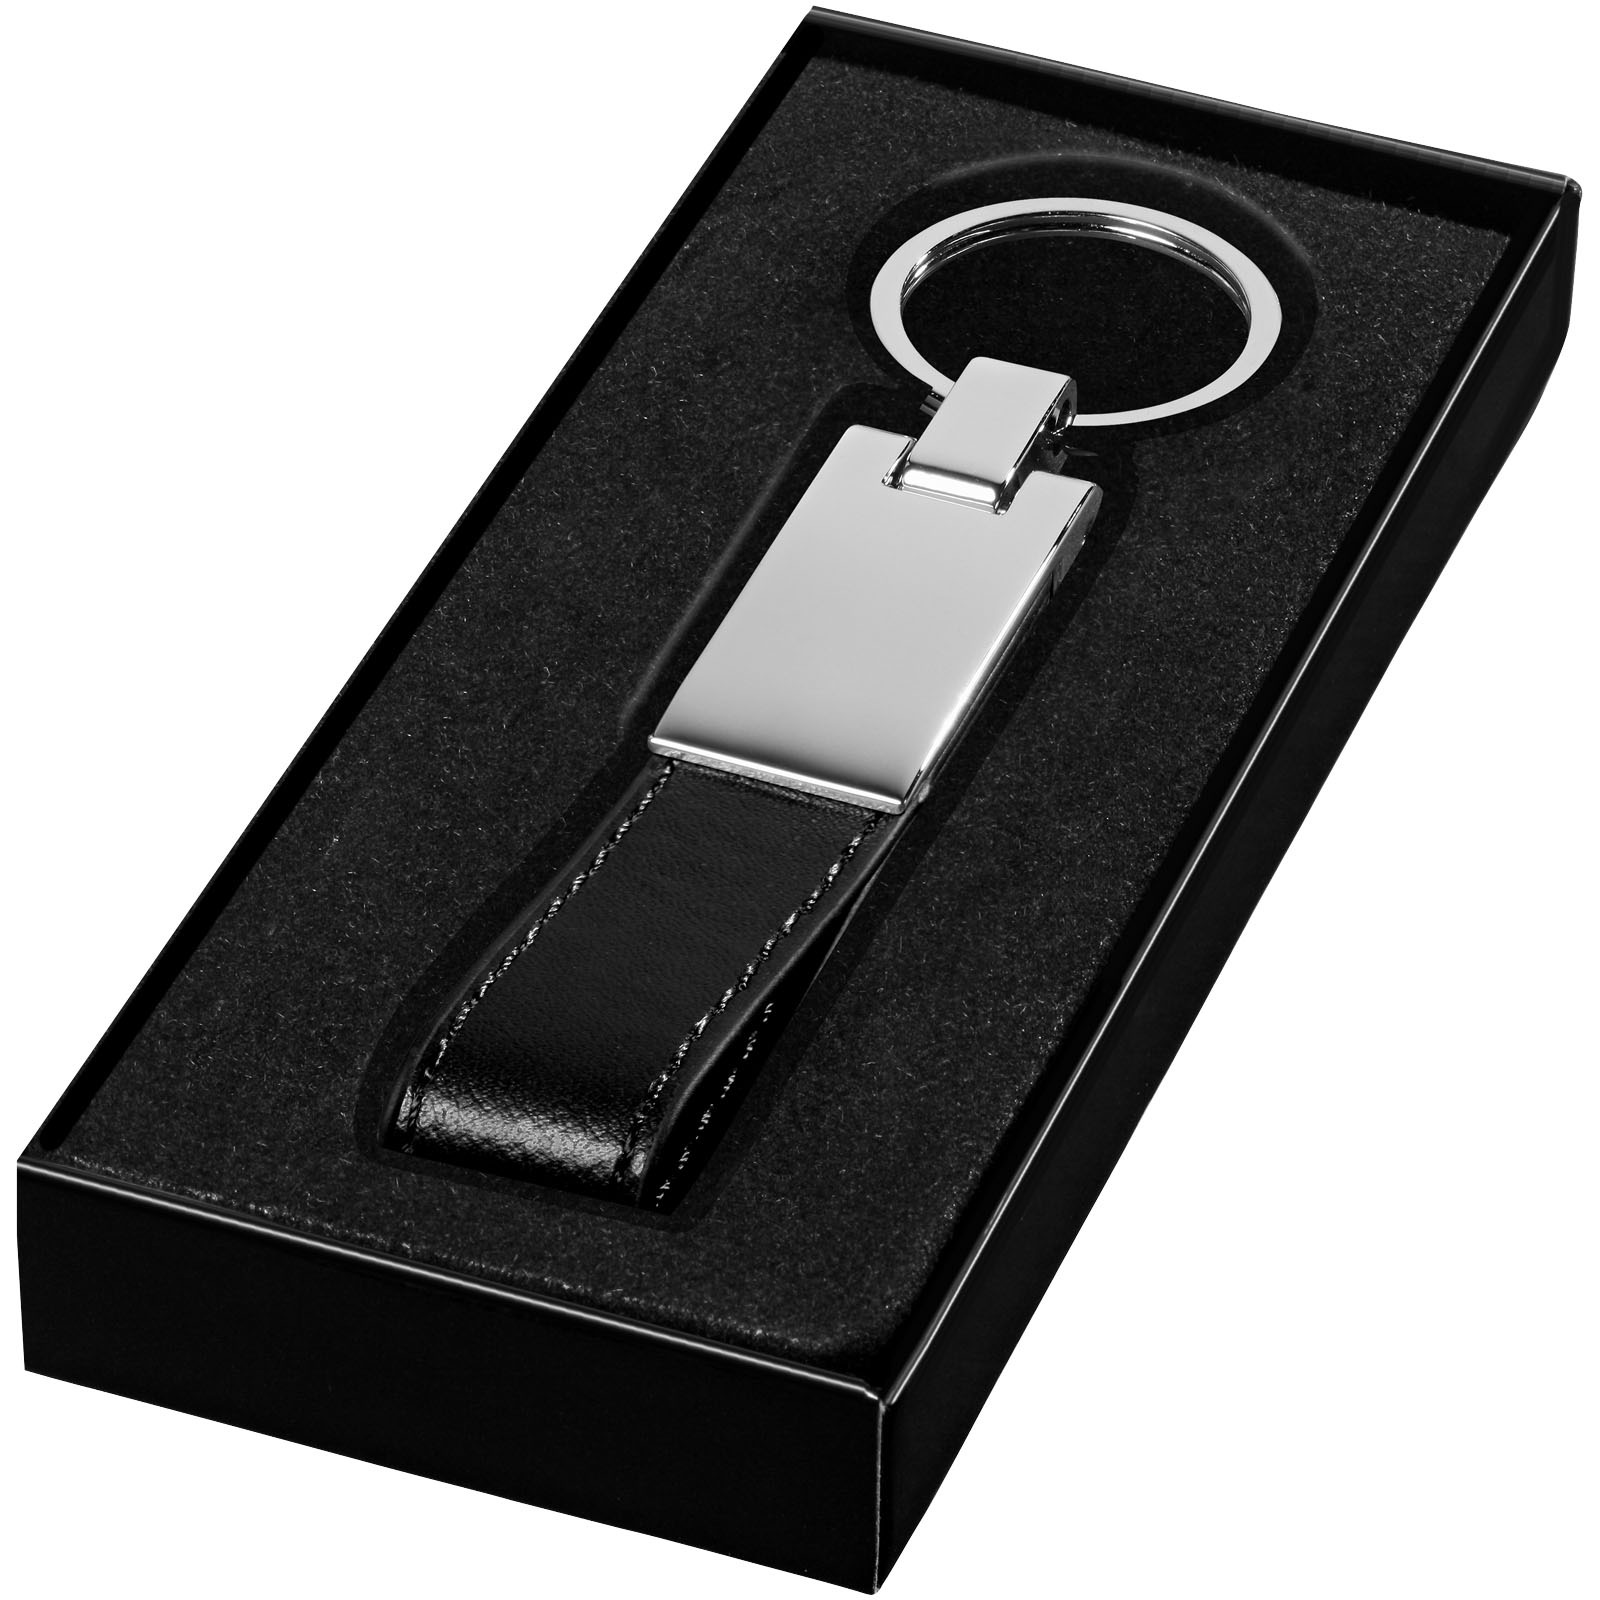 Corsa strap keychain - JSM Brand Exposure